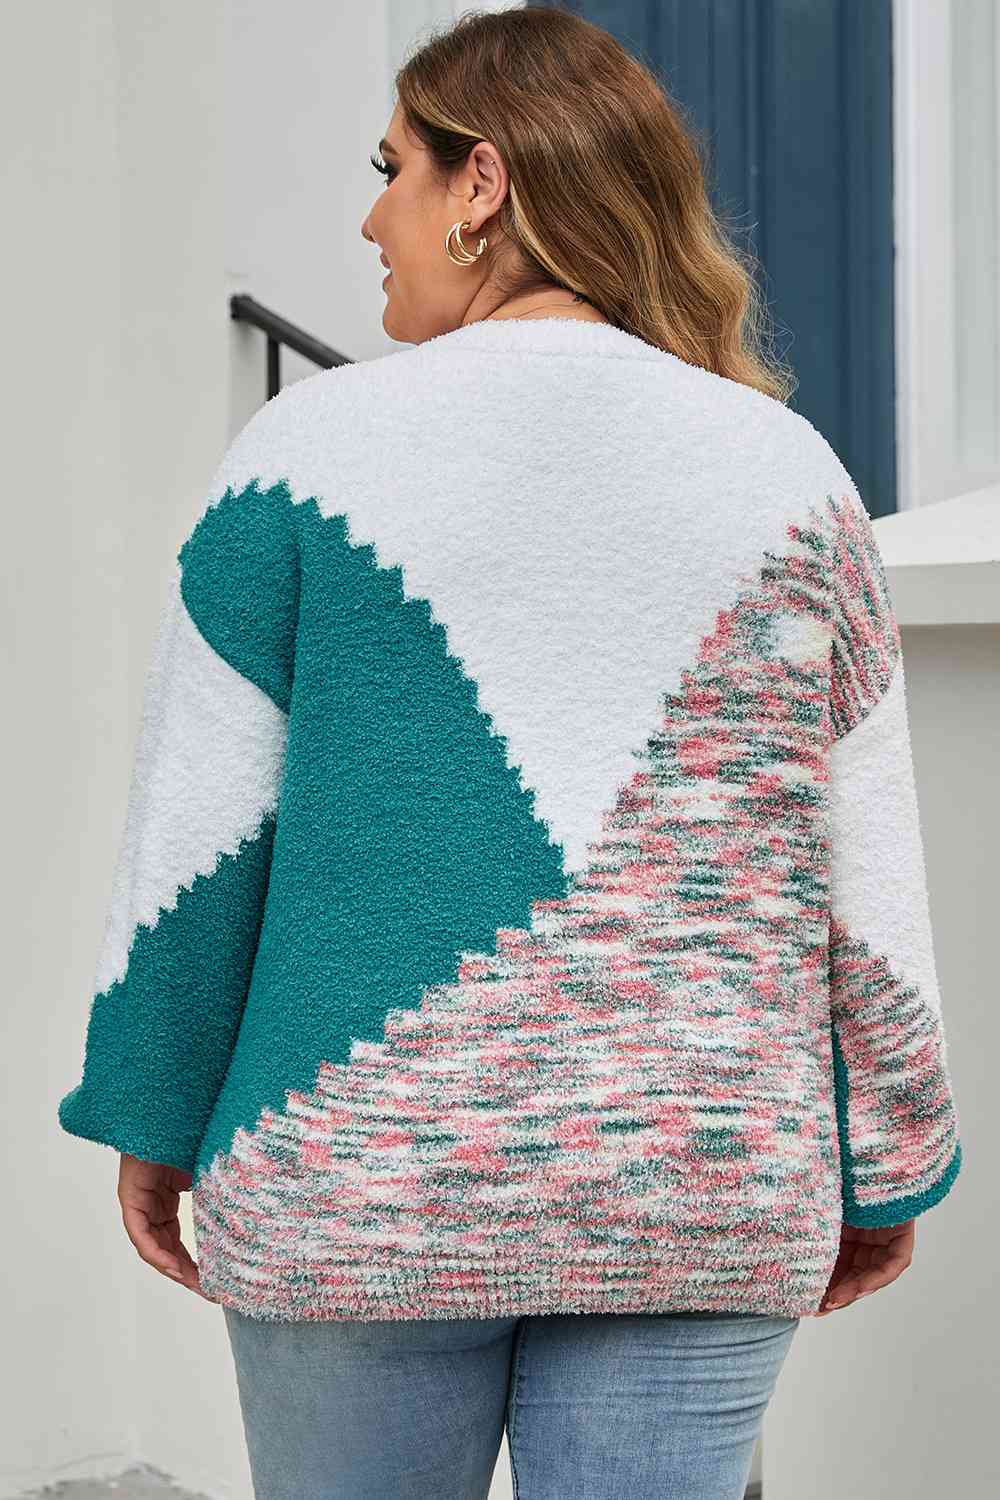 Plus Size Color Block Sweater